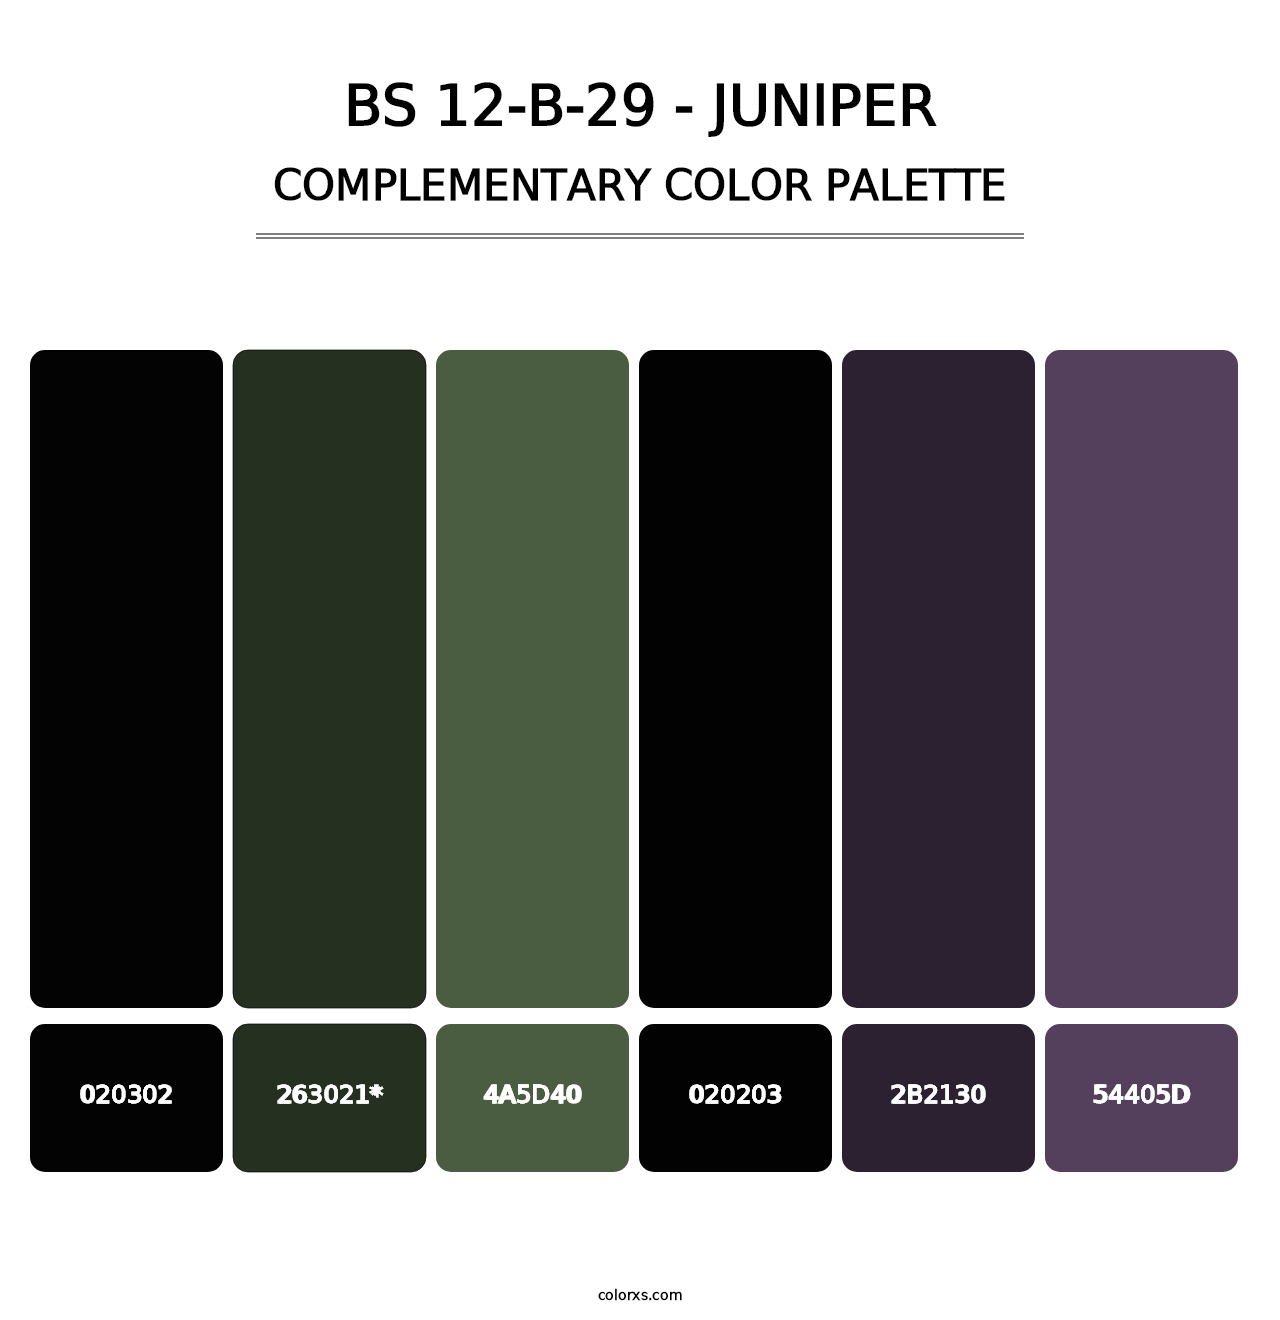 BS 12-B-29 - Juniper - Complementary Color Palette